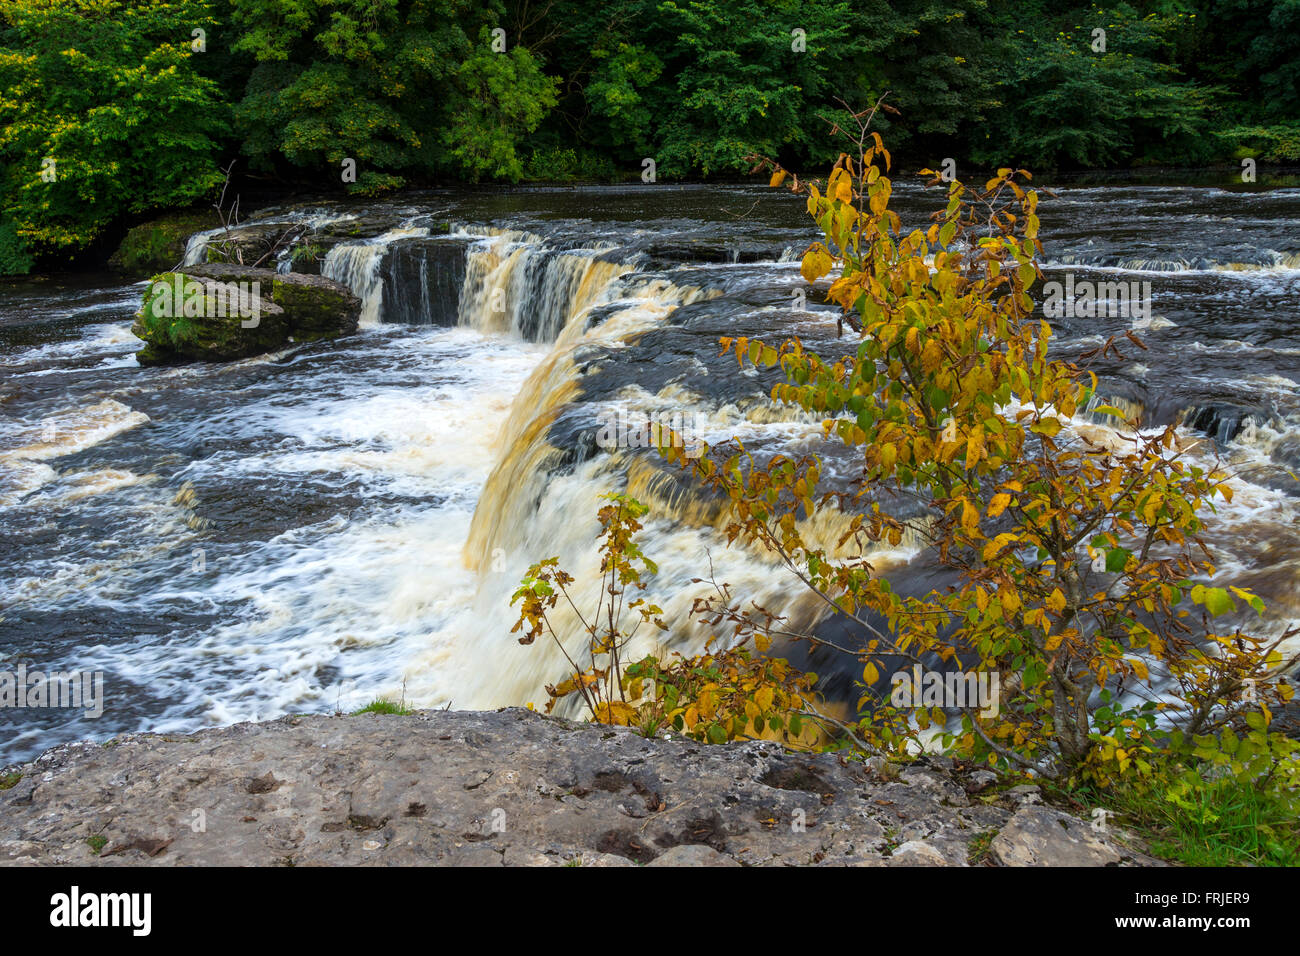 Upper Falls, Aysgarth Falls, Wensleydale, Yorkshire Dales National Park, England, UK Stockfoto